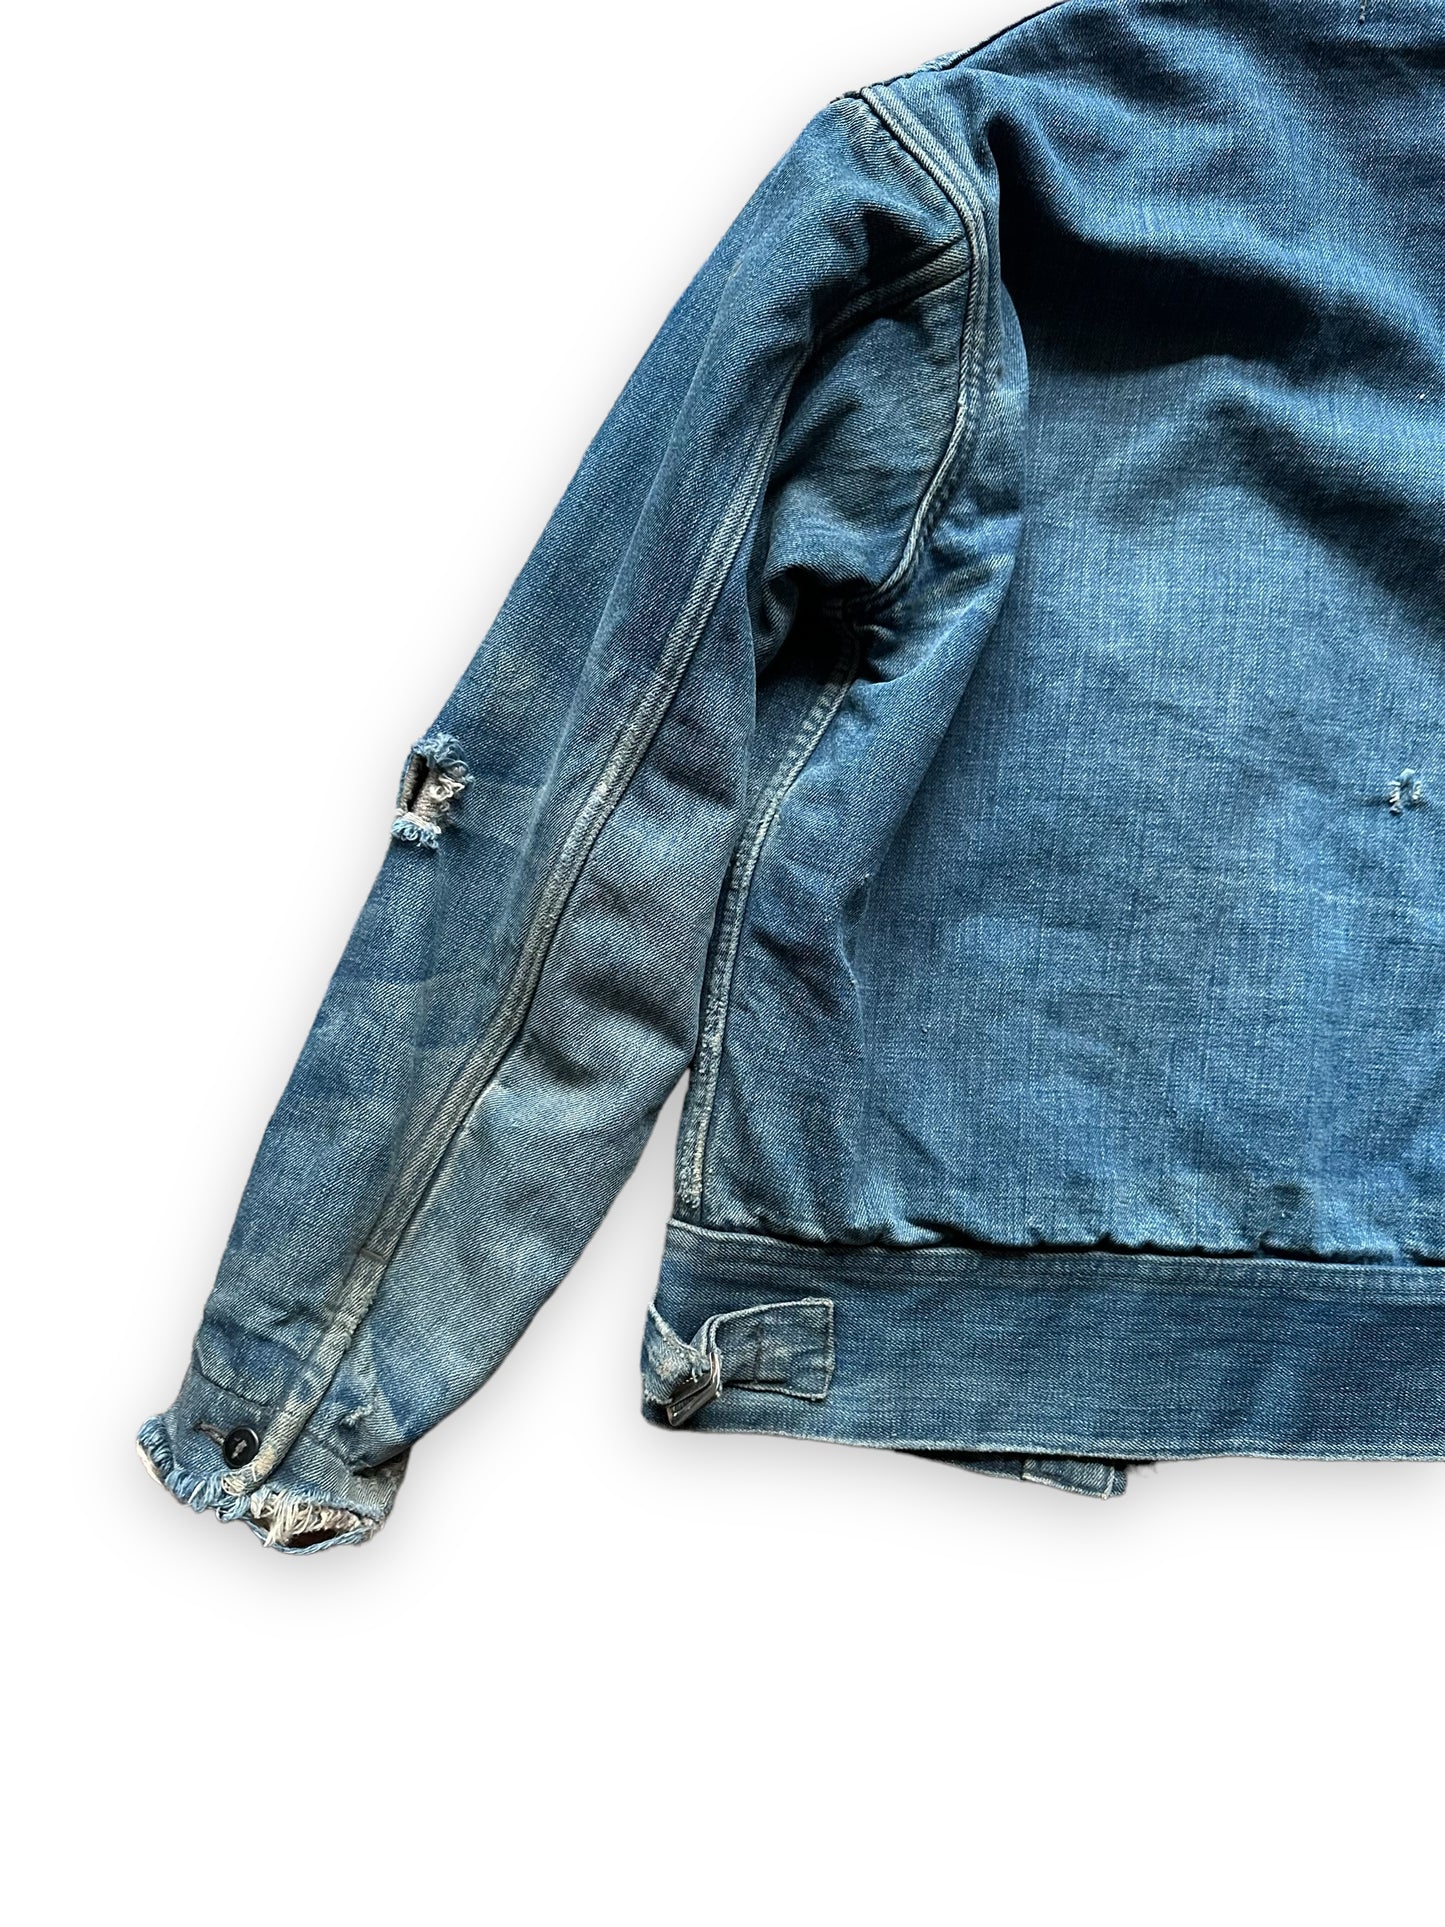 Left Rear View on Vintage Blanket Lined Fitz Denim Jacket | Seattle Vintage Workwear Clothing | Barn Owl Vintage